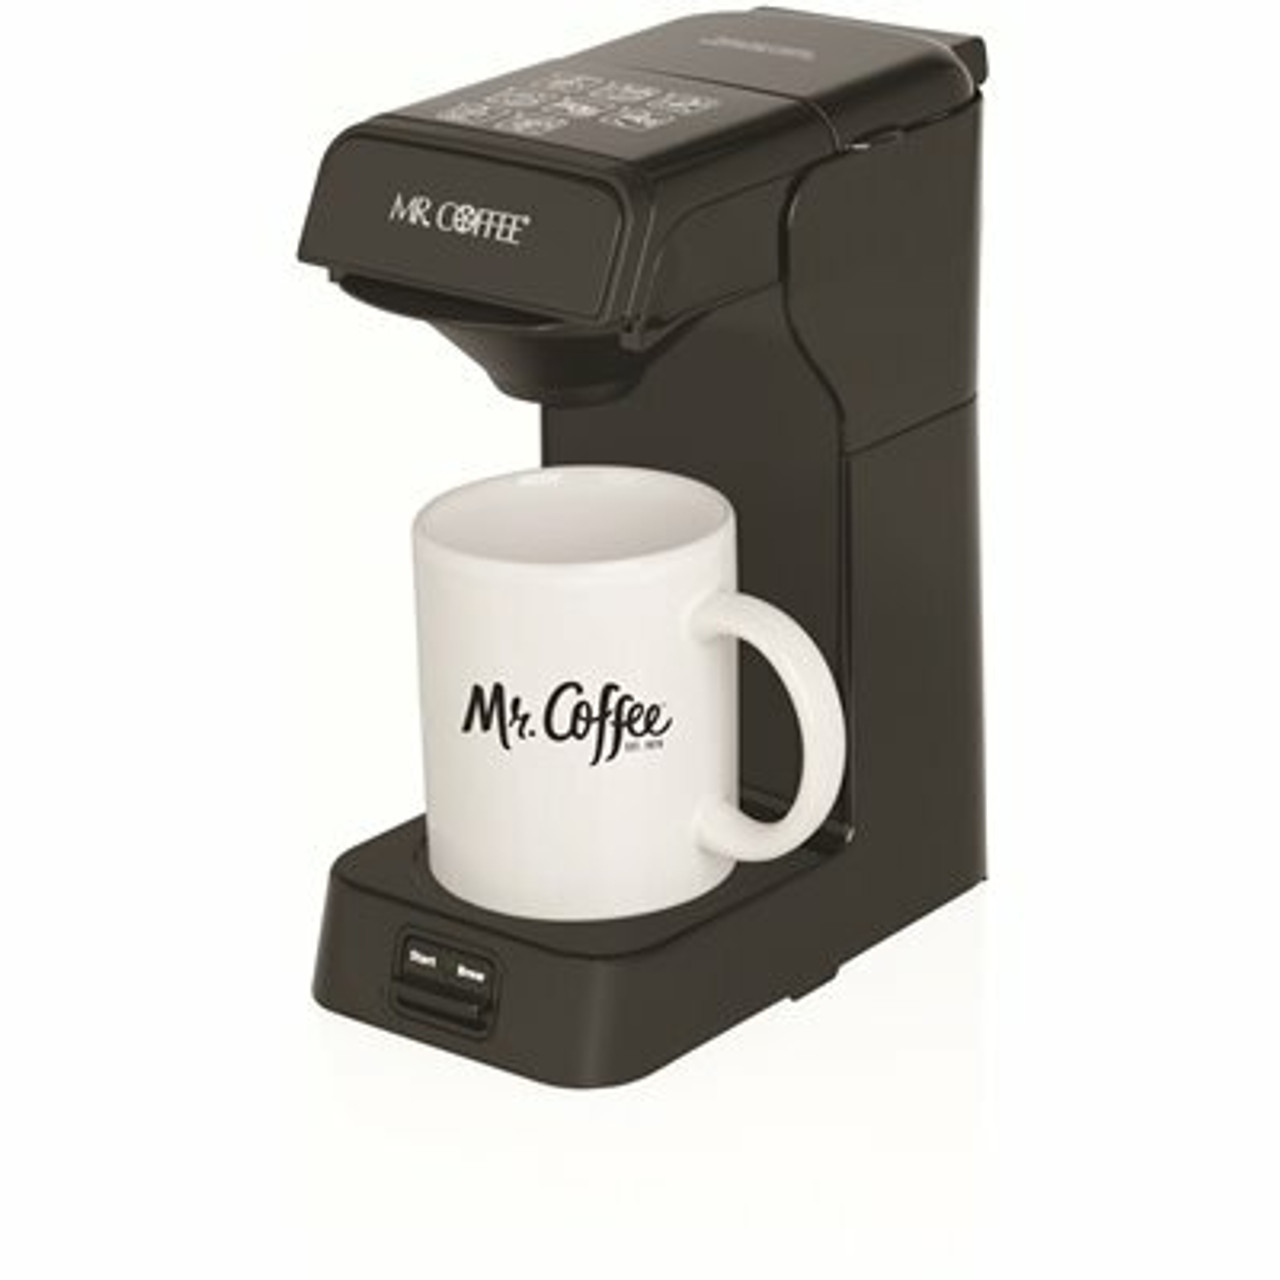 Mr. Coffee Single Serve Coffee Maker